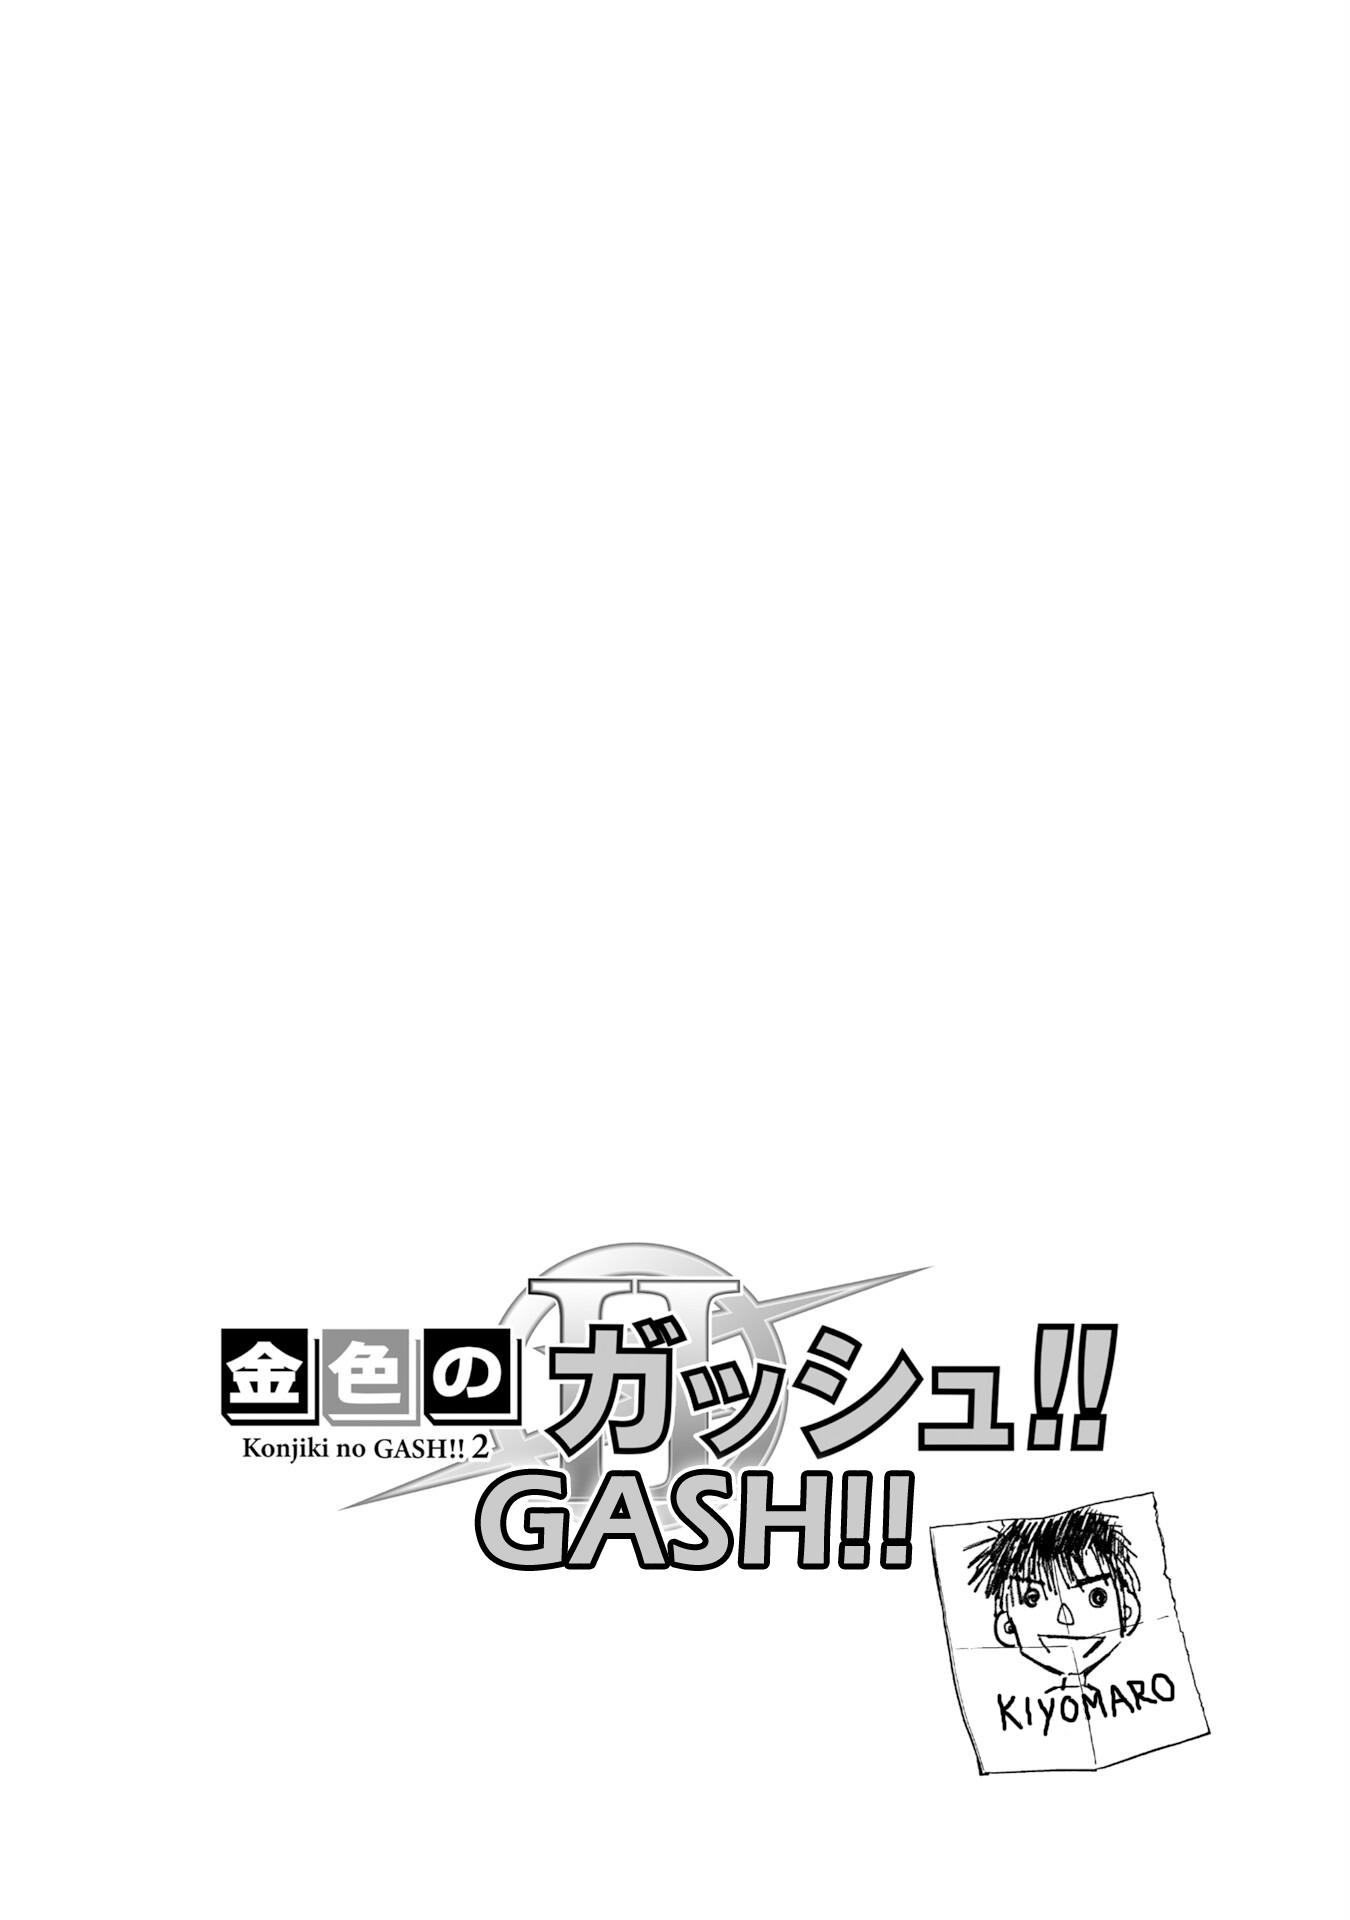 Read Zatch Bell! 2 Vol.2 Chapter 11.5: Vol.2 Bonus Pages (Gash Cafe) -  Manganelo